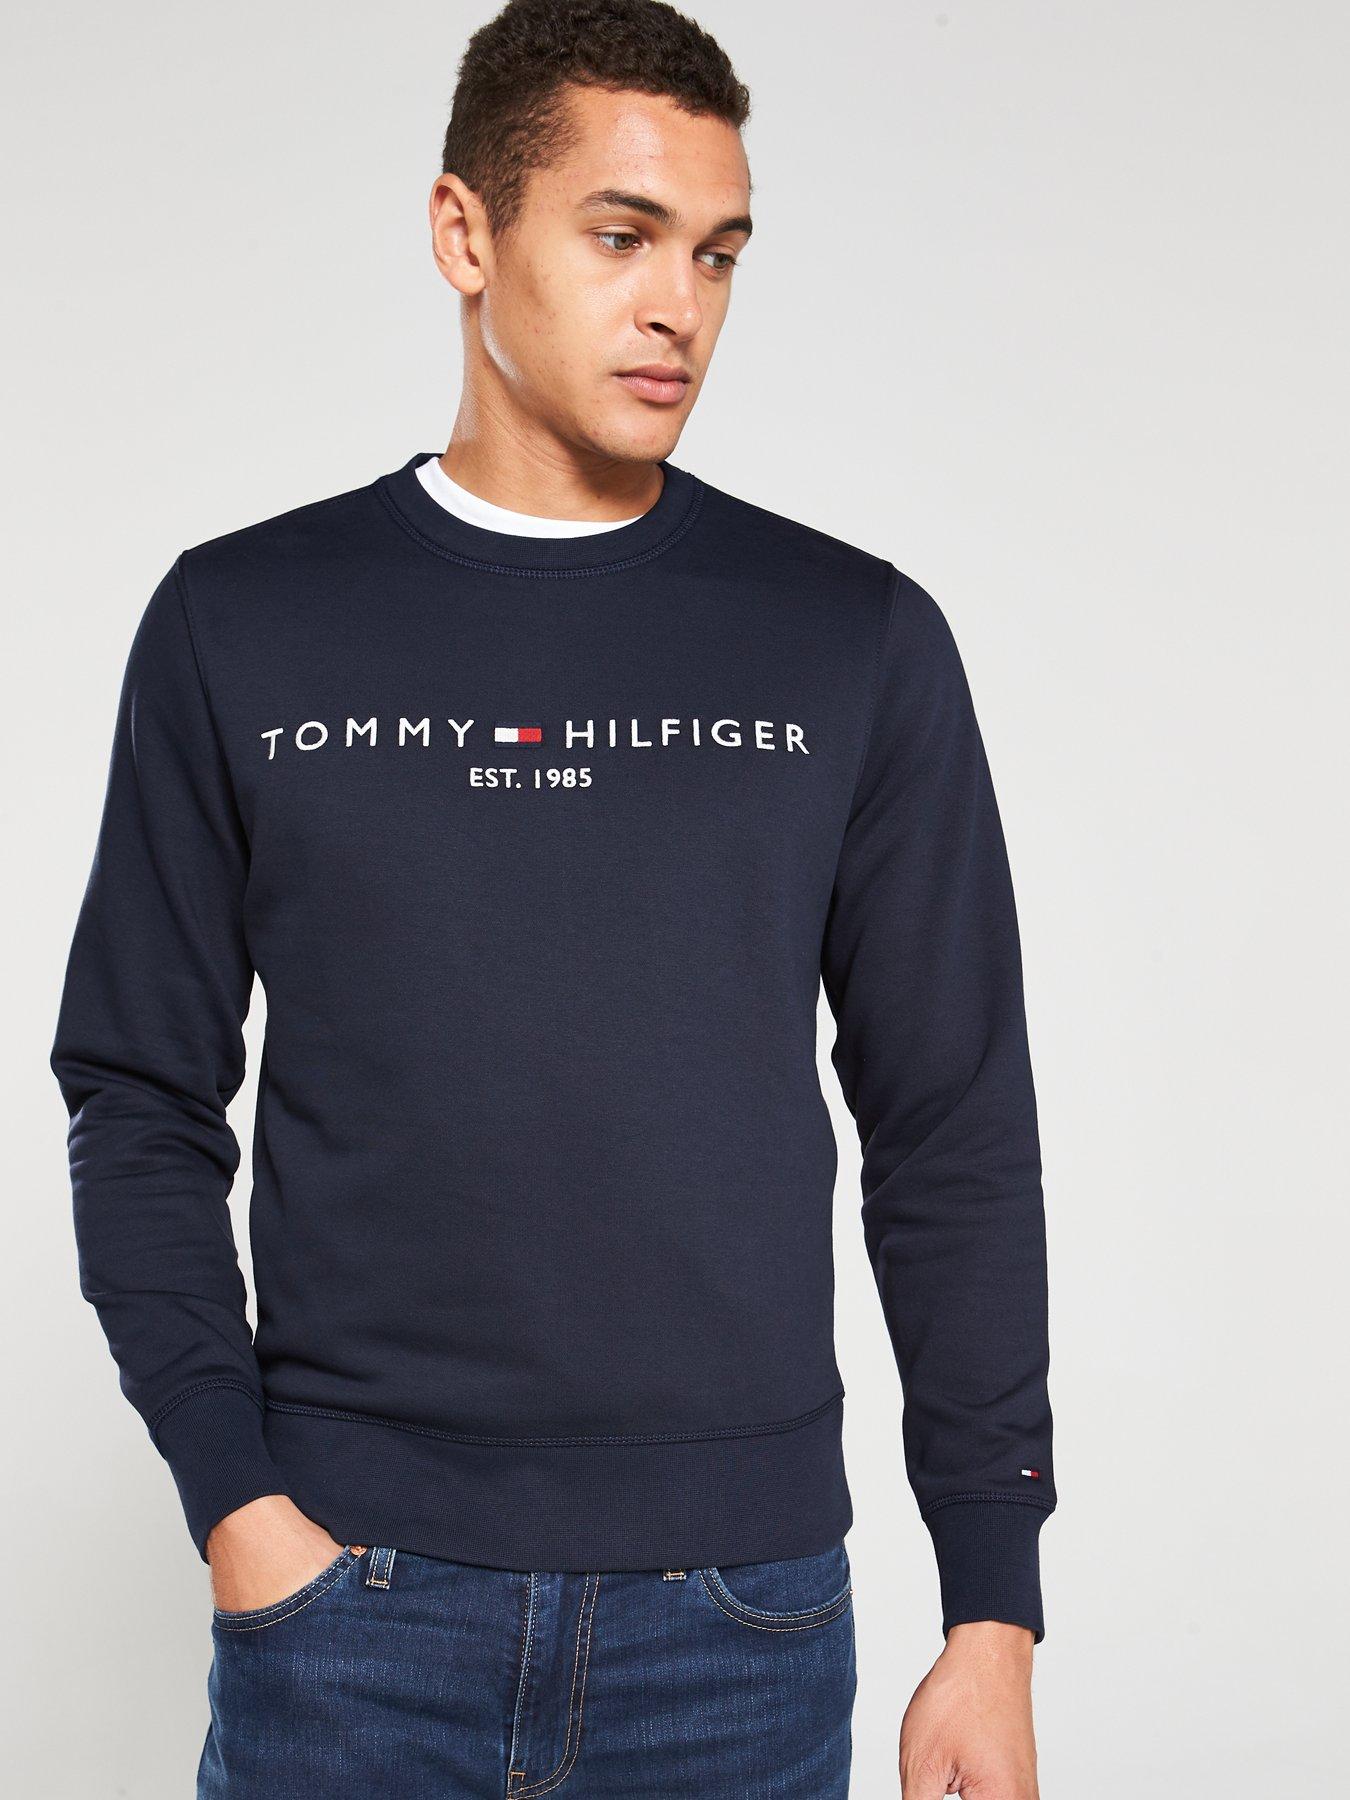 tommy hilfiger sweatshirt mens